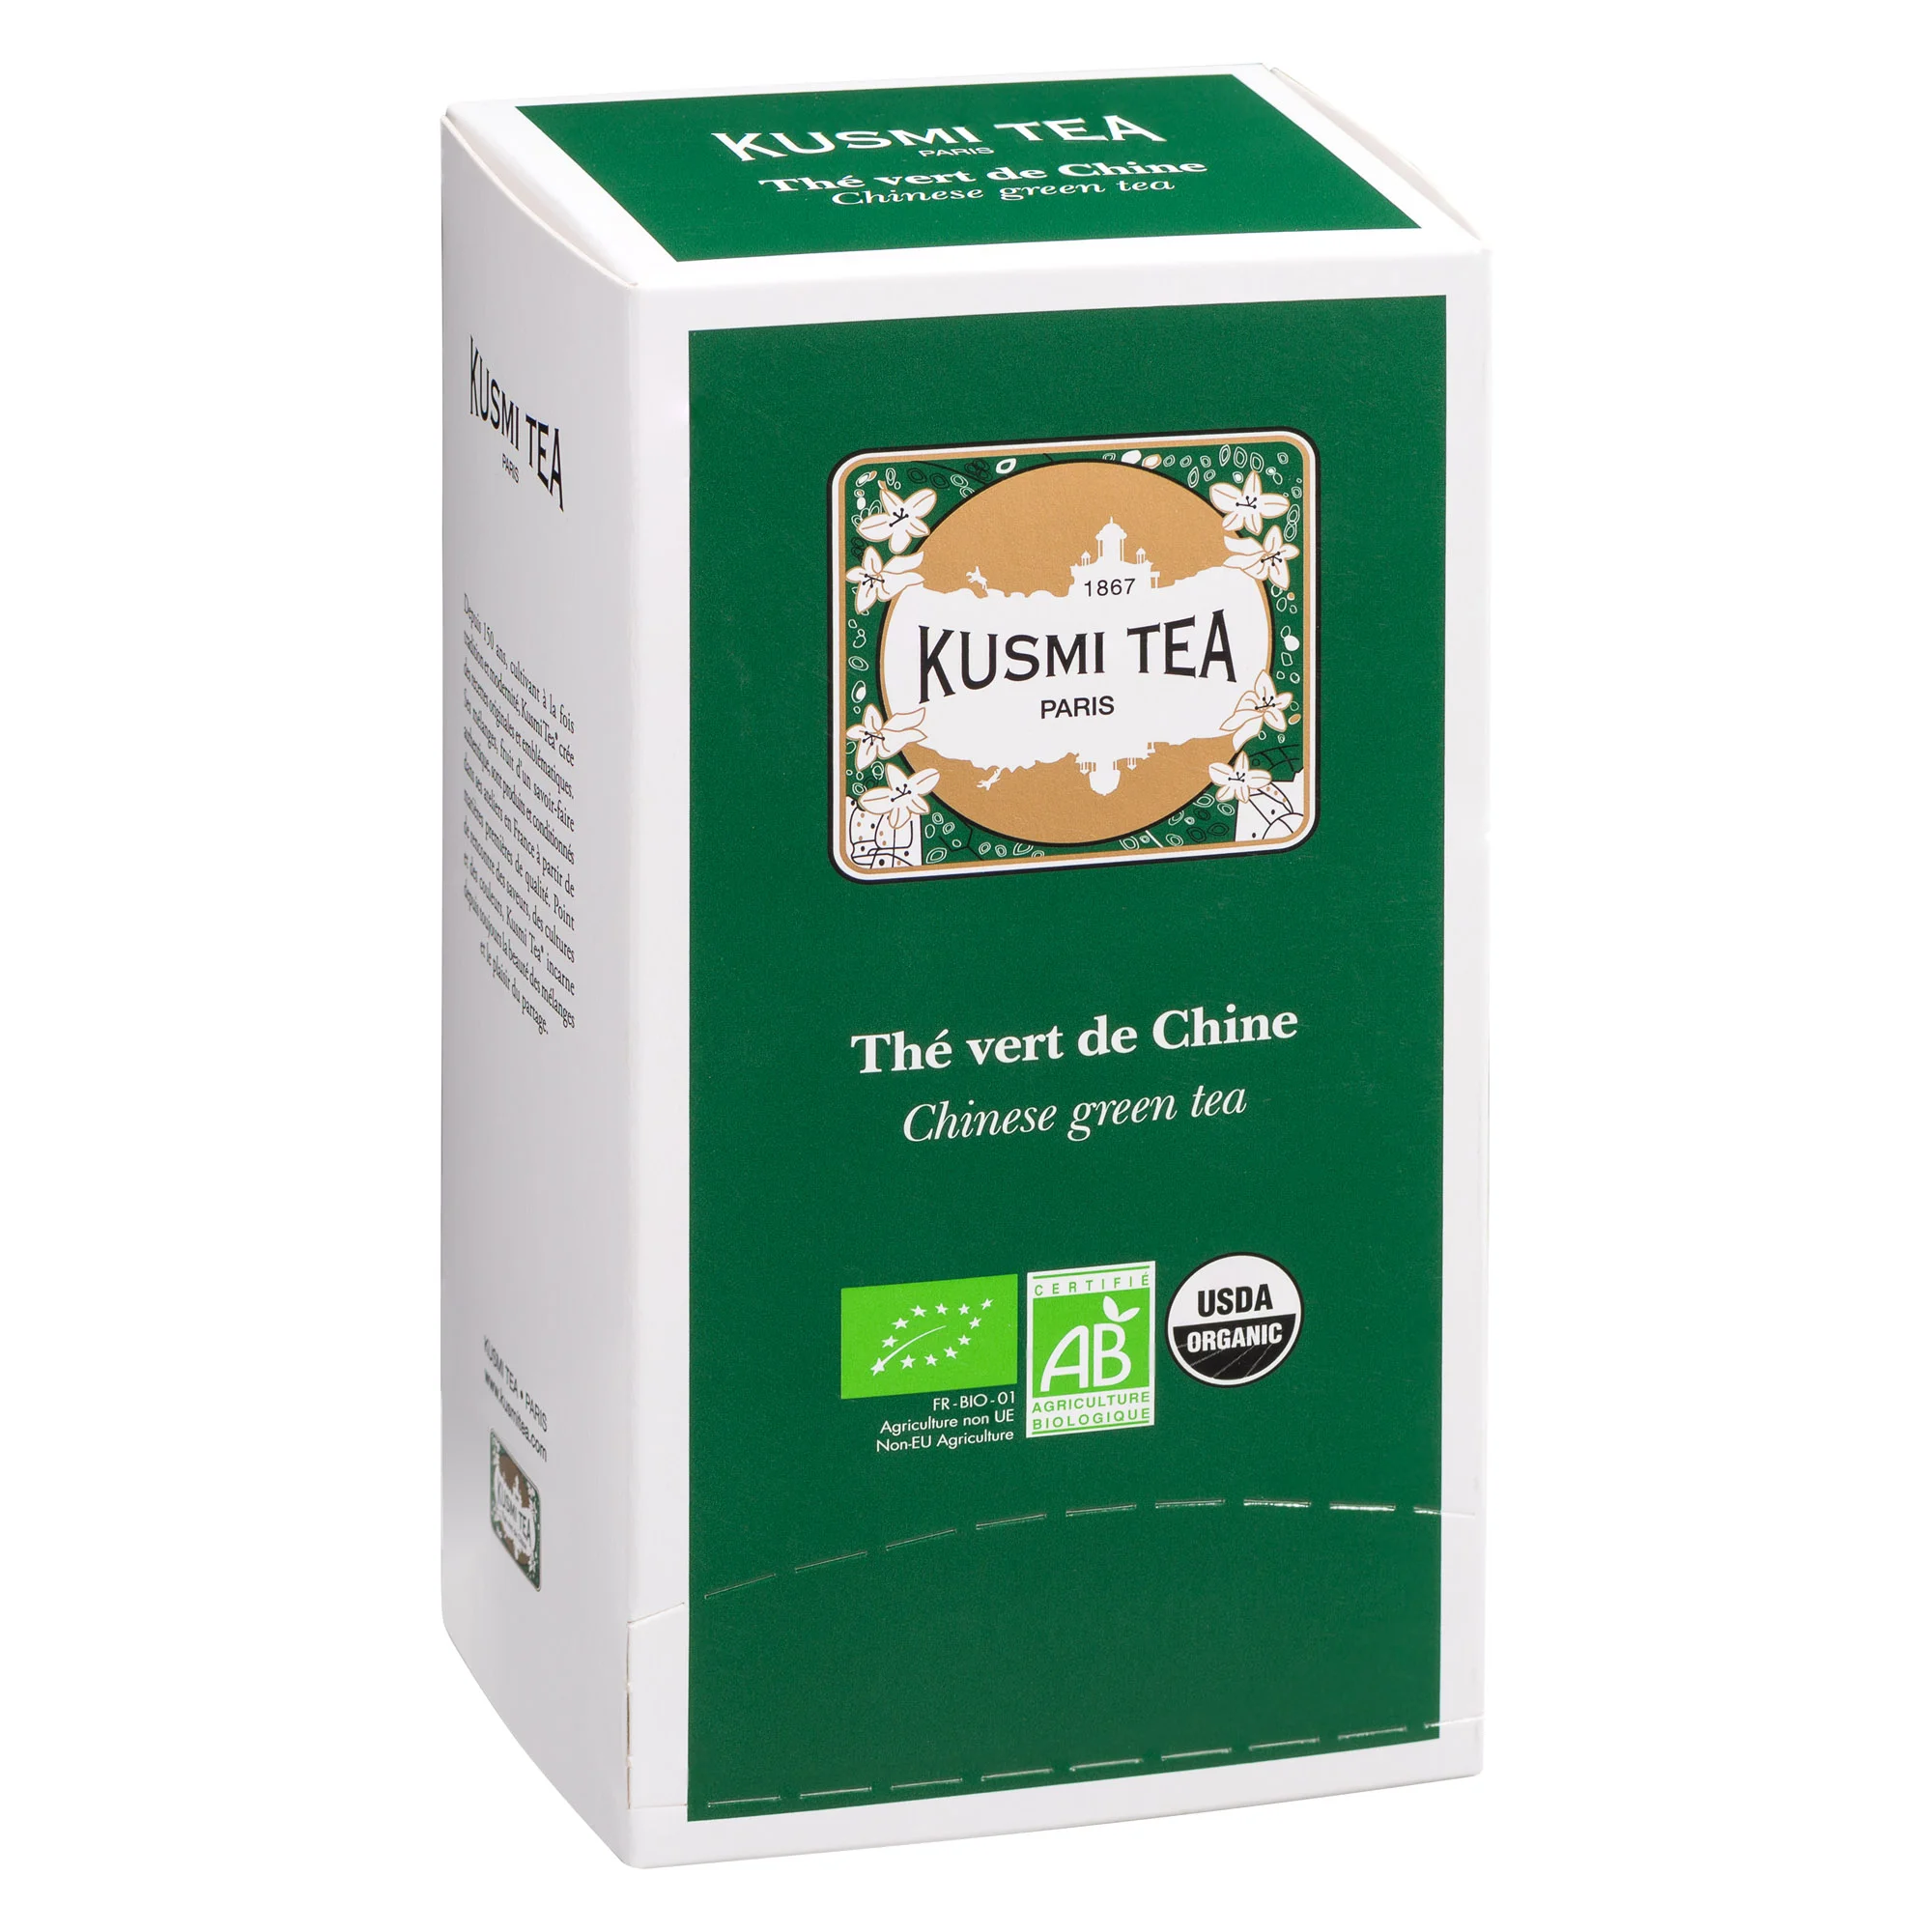 Organic green tea from China